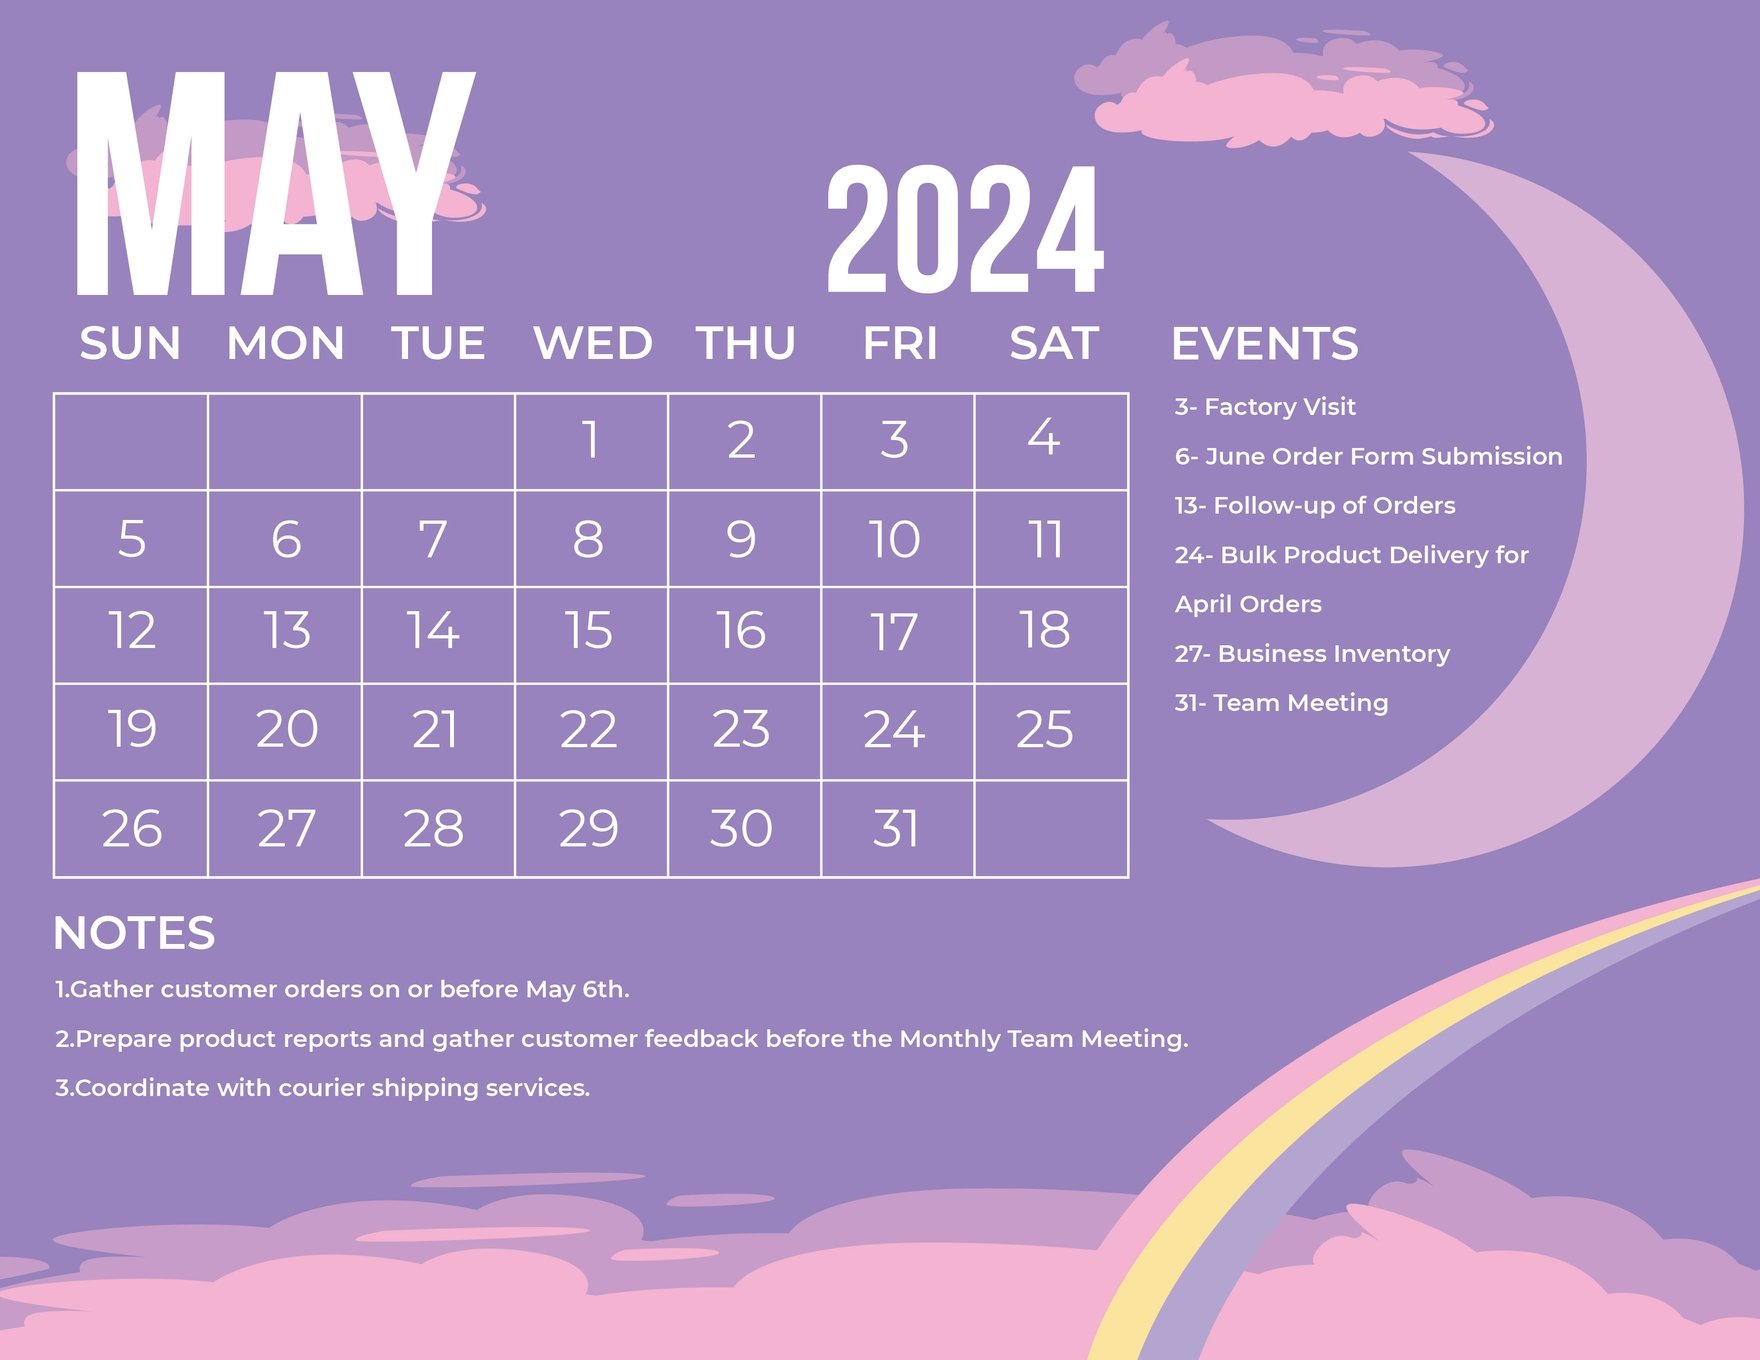 Free Pretty May 2024 Calendar in Word, Illustrator, EPS, SVG, JPG